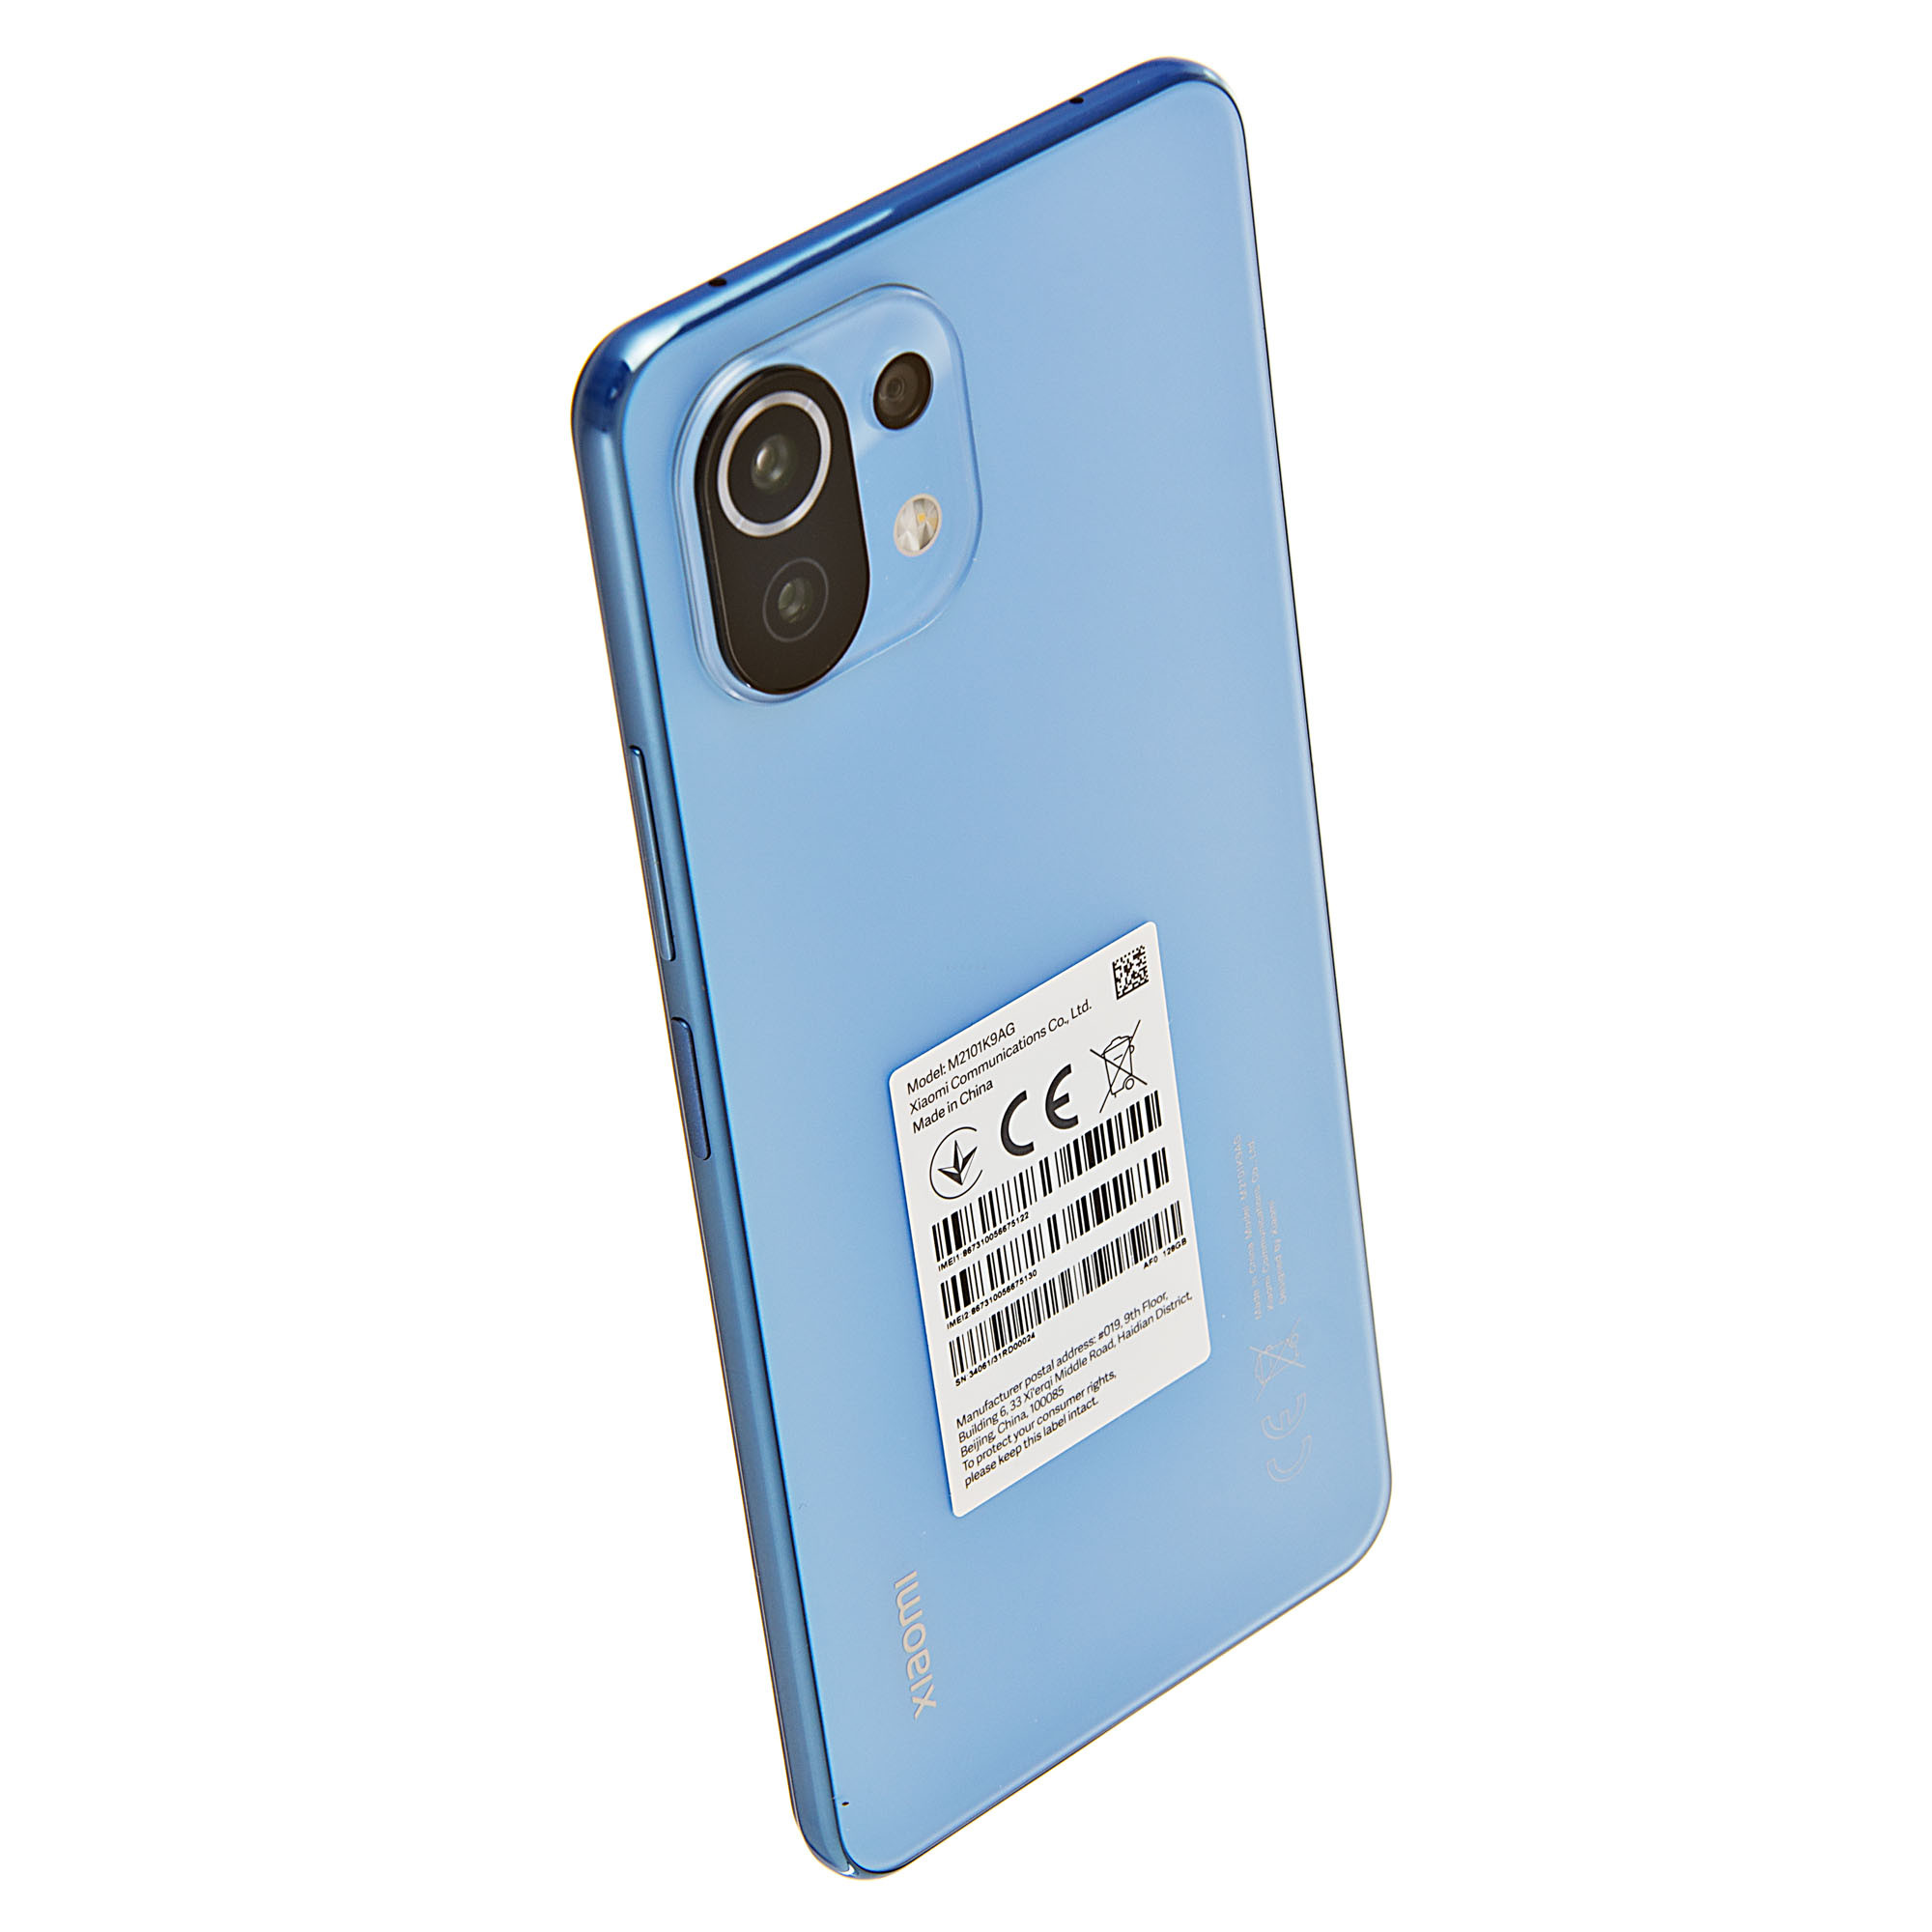 Xiaomi Mi 11 Lite 5G NE - Teléfono celular desbloqueado, 5G + 4G Volte  Smartphone, 8GB+128GB, 6.55 pulgadas FHD+AMOLED DotDisplay, 64MP+8MP+5MP  cámara triple, 4250mAh 33W carga rápida, GSM solamente, azul : Precio